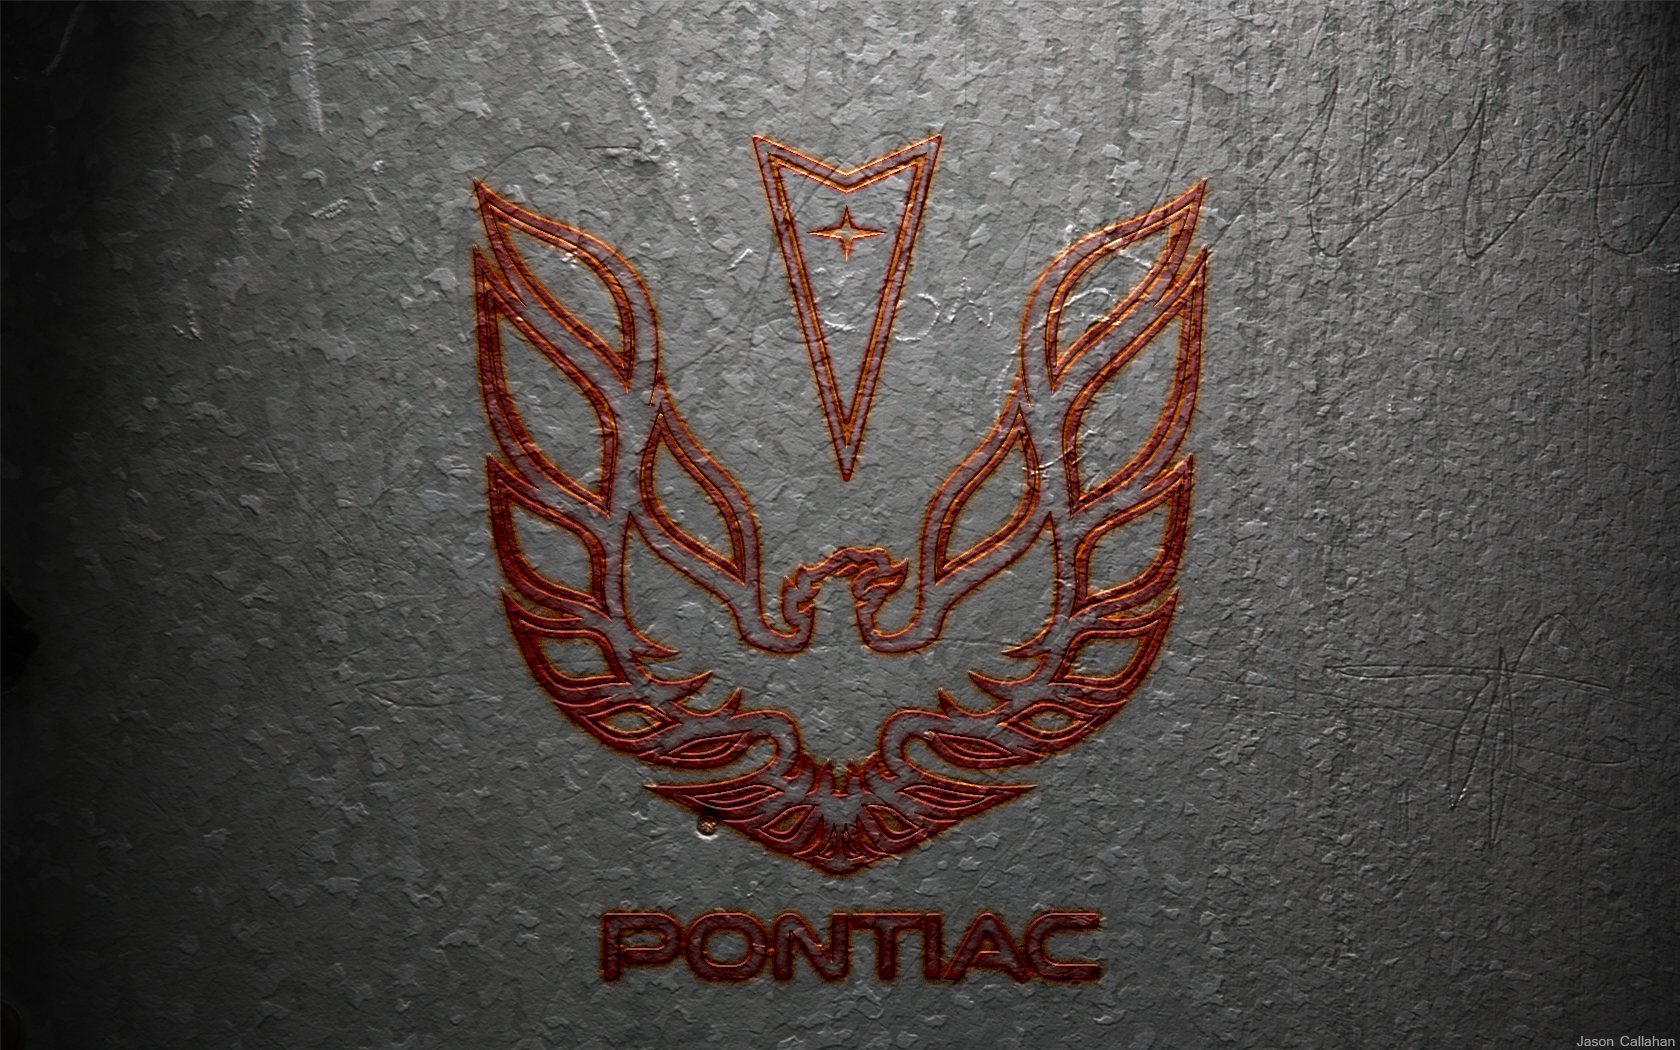 Gallery For Gt Pontiac Firebird Logo Tattoo